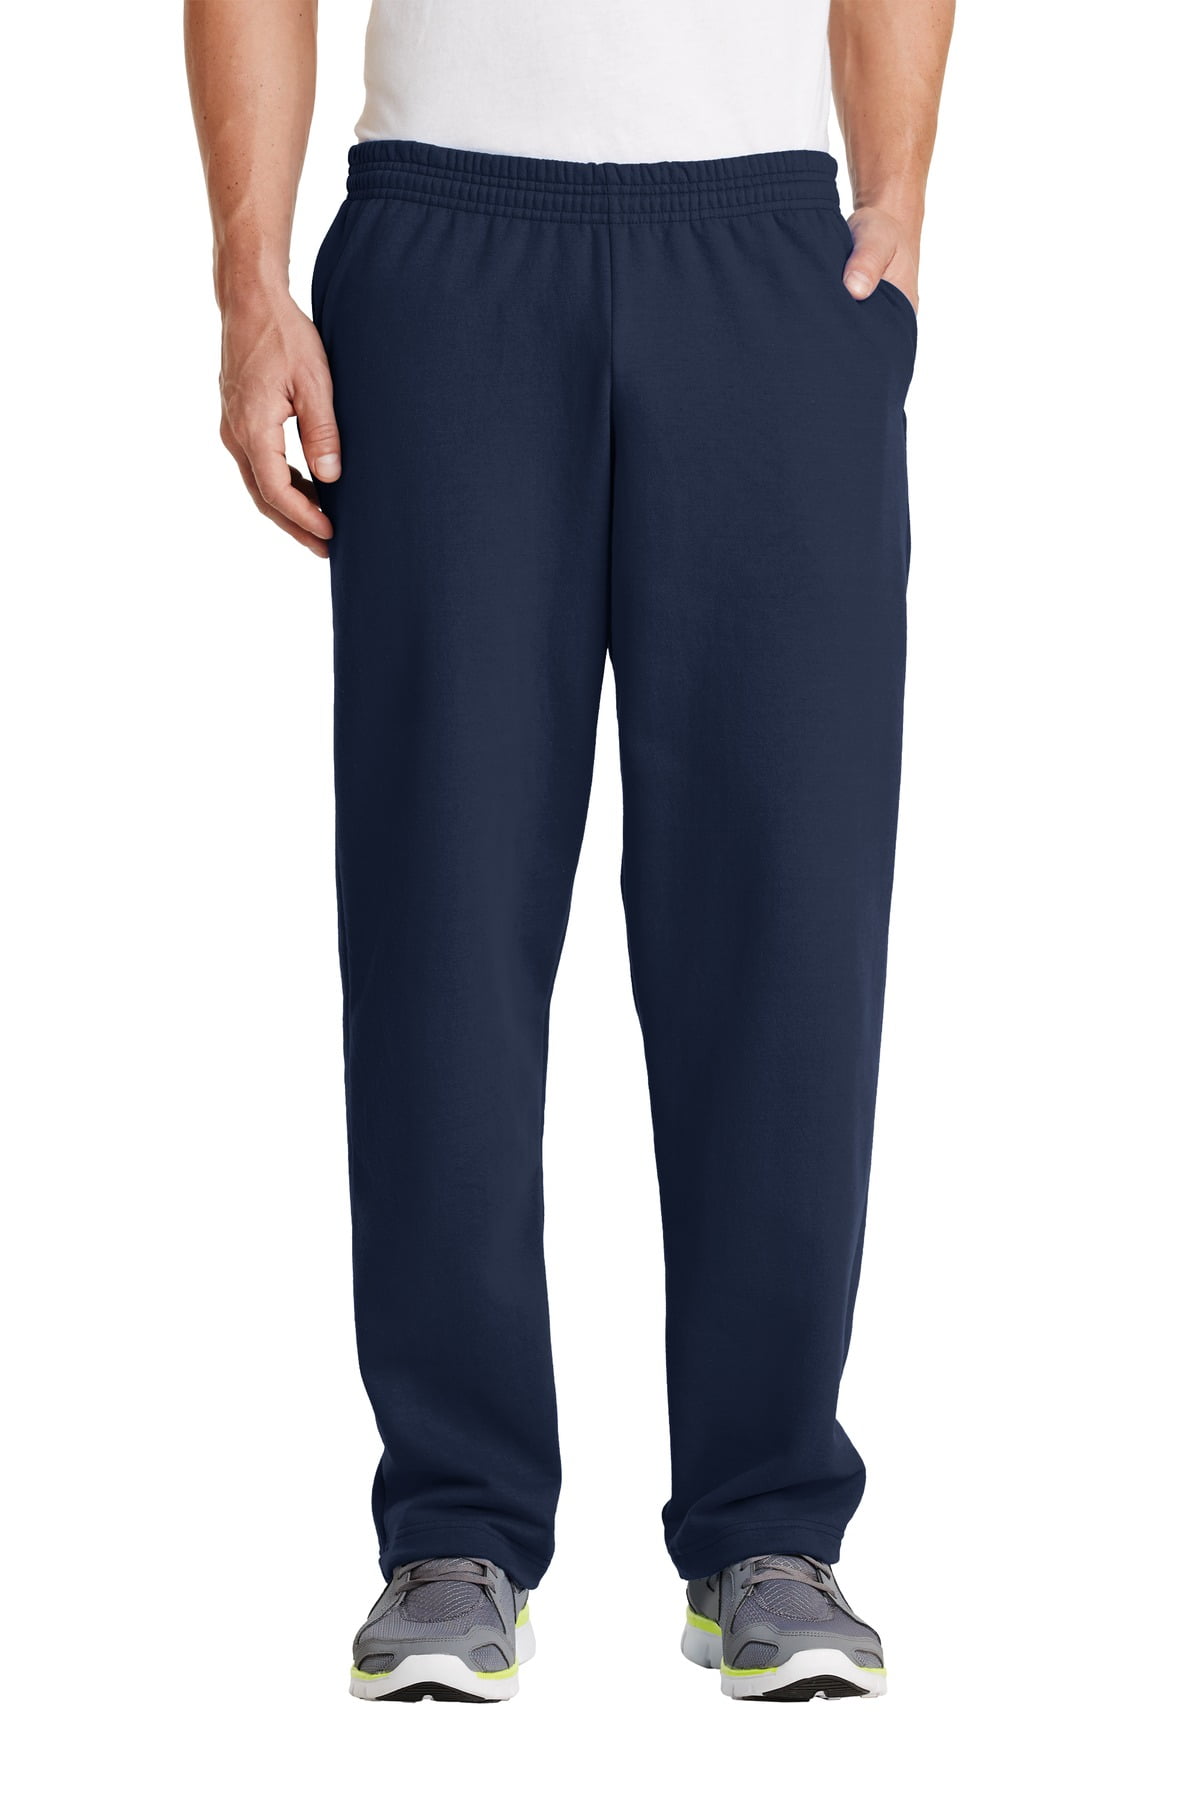 Port & Company - Core Fleece Sweatpant with Pockets 